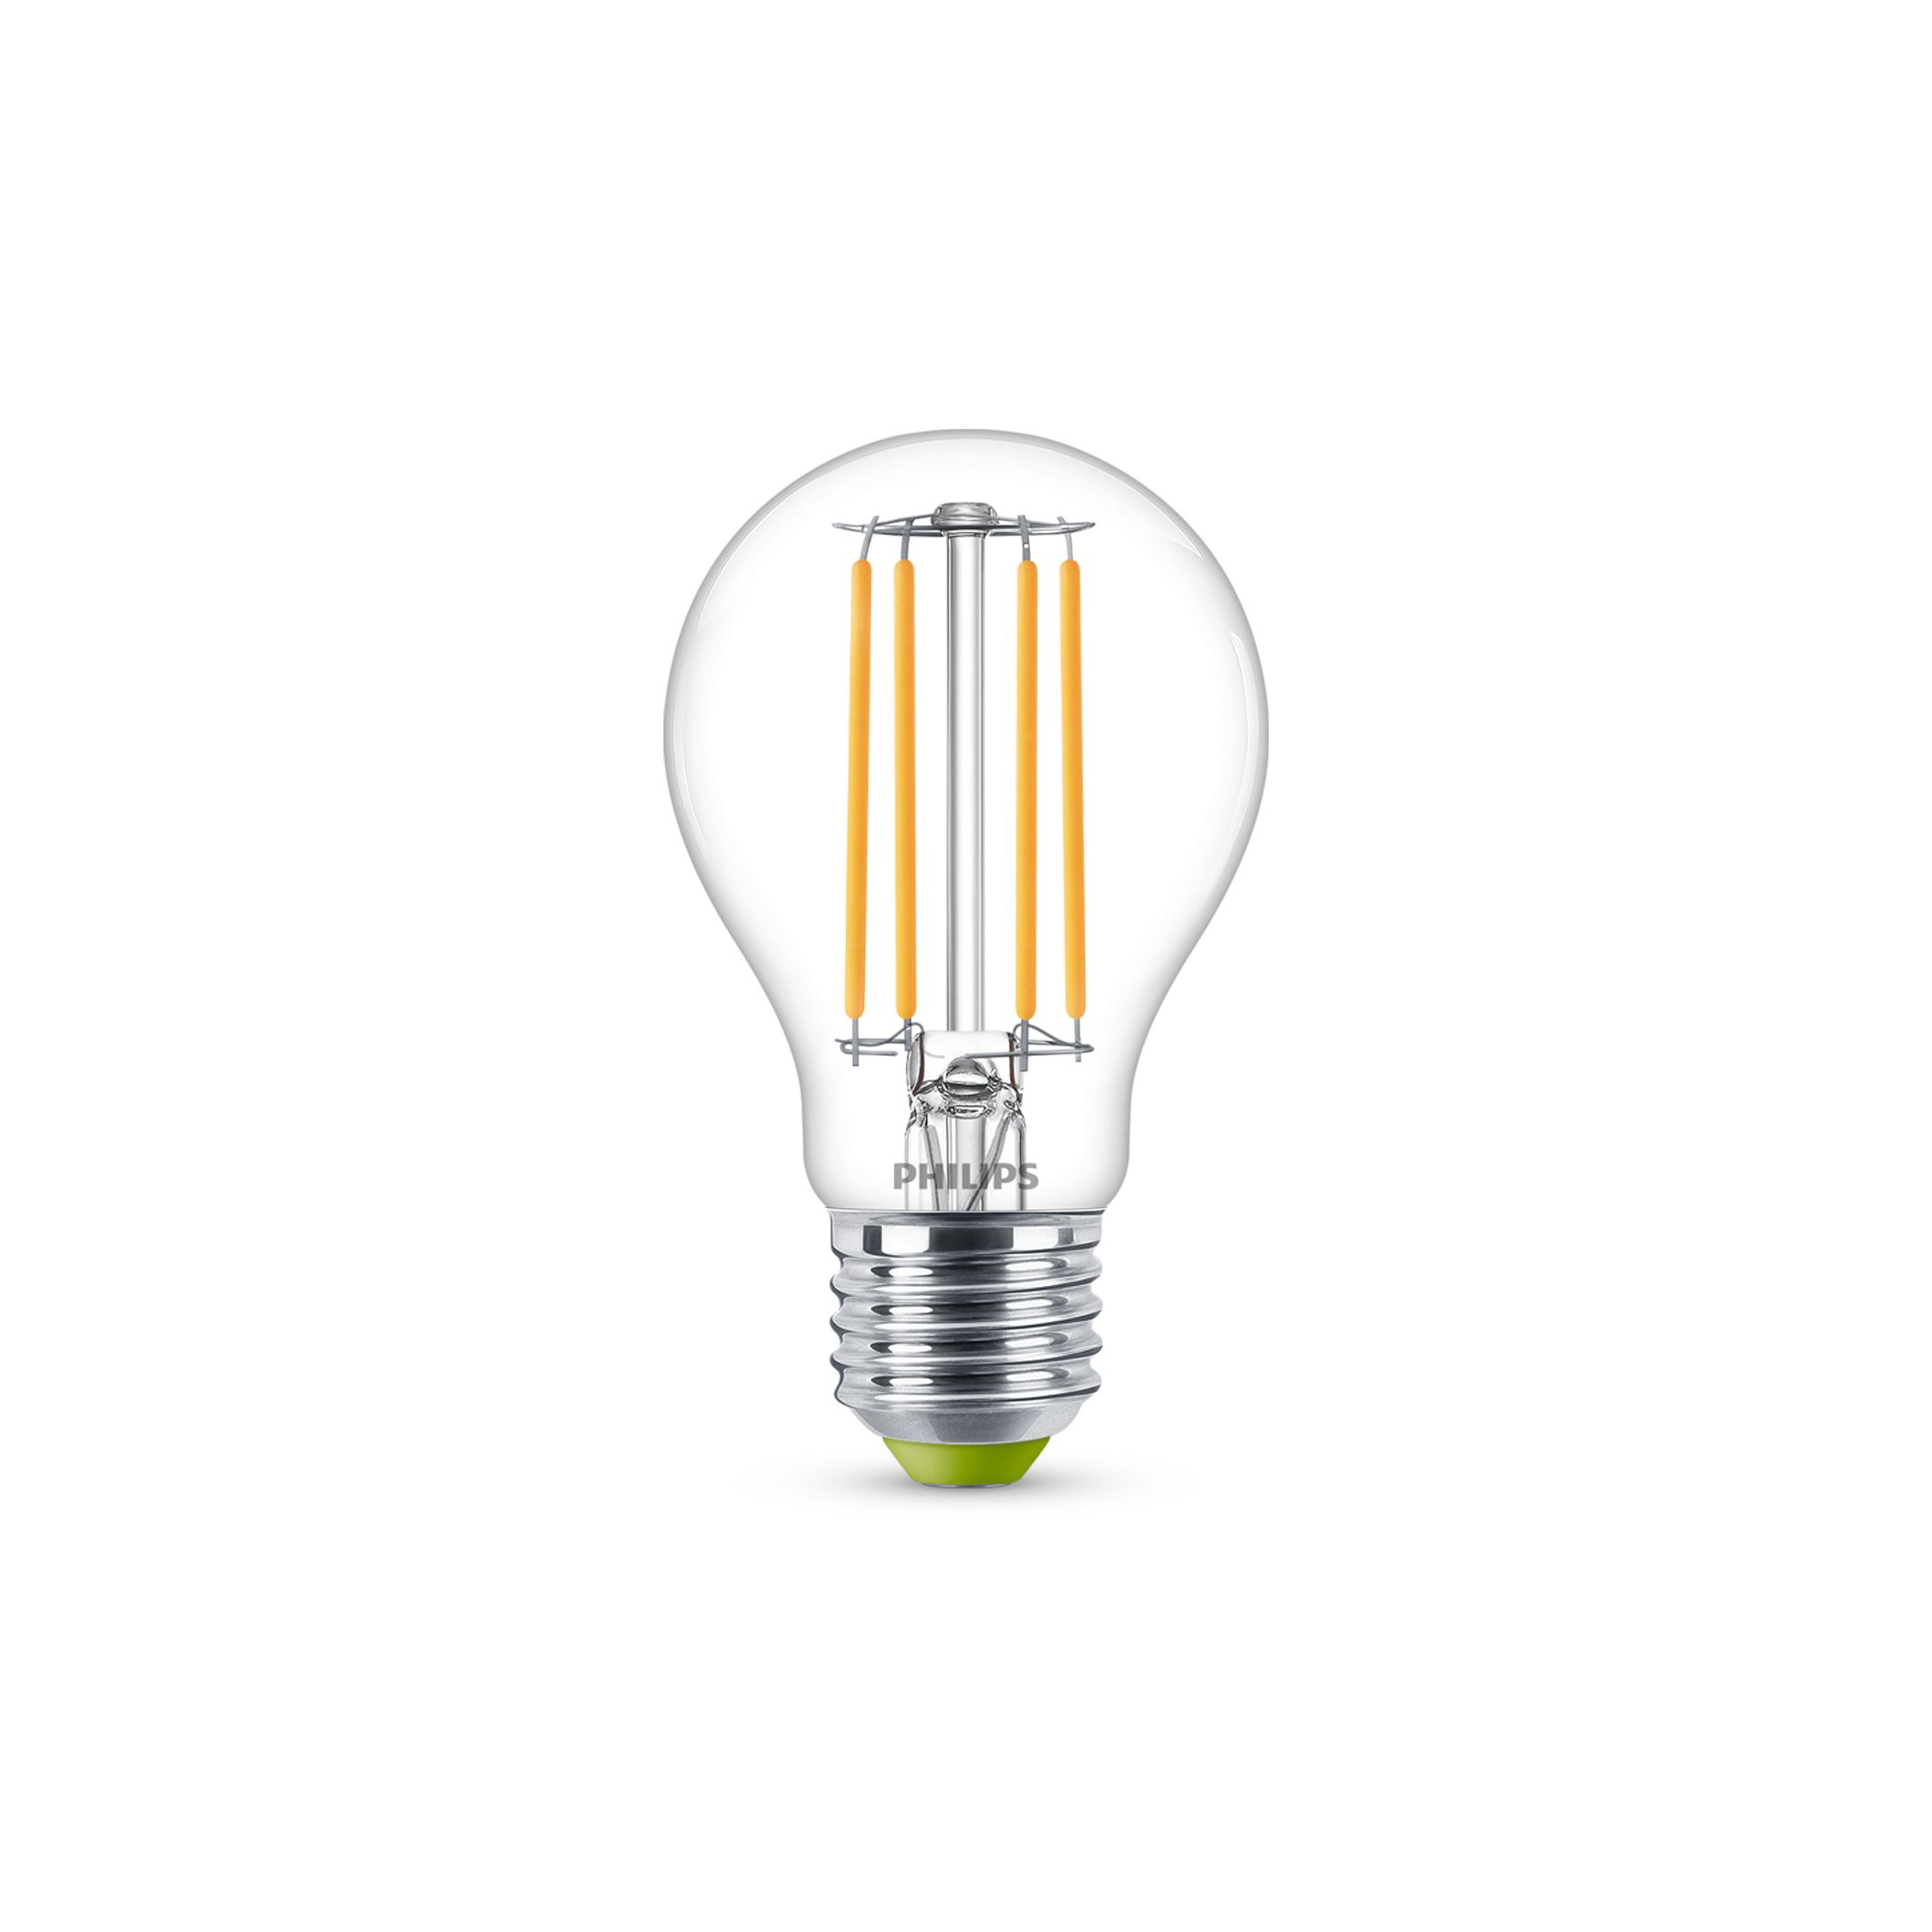 UltraEfficient LED | 8932020 | lighting